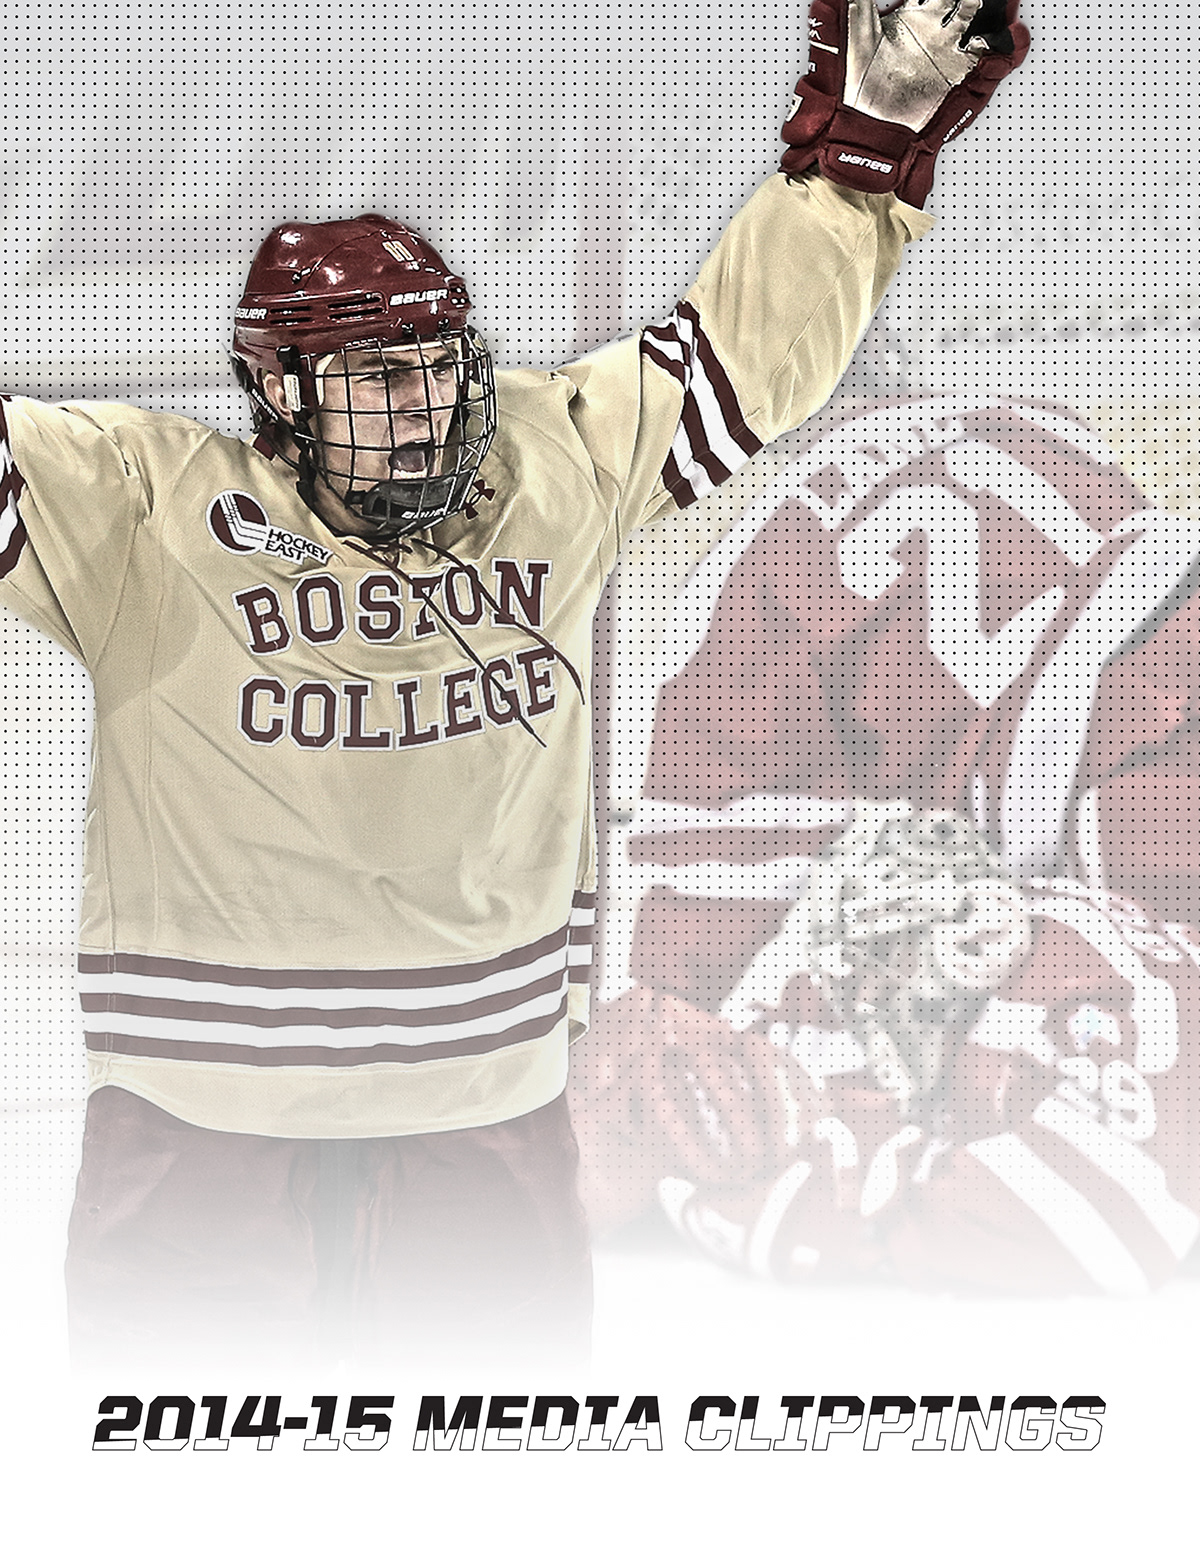 Boston College hockey NCAA Ice Hockey college athletics social media twitter infographic sports athletics